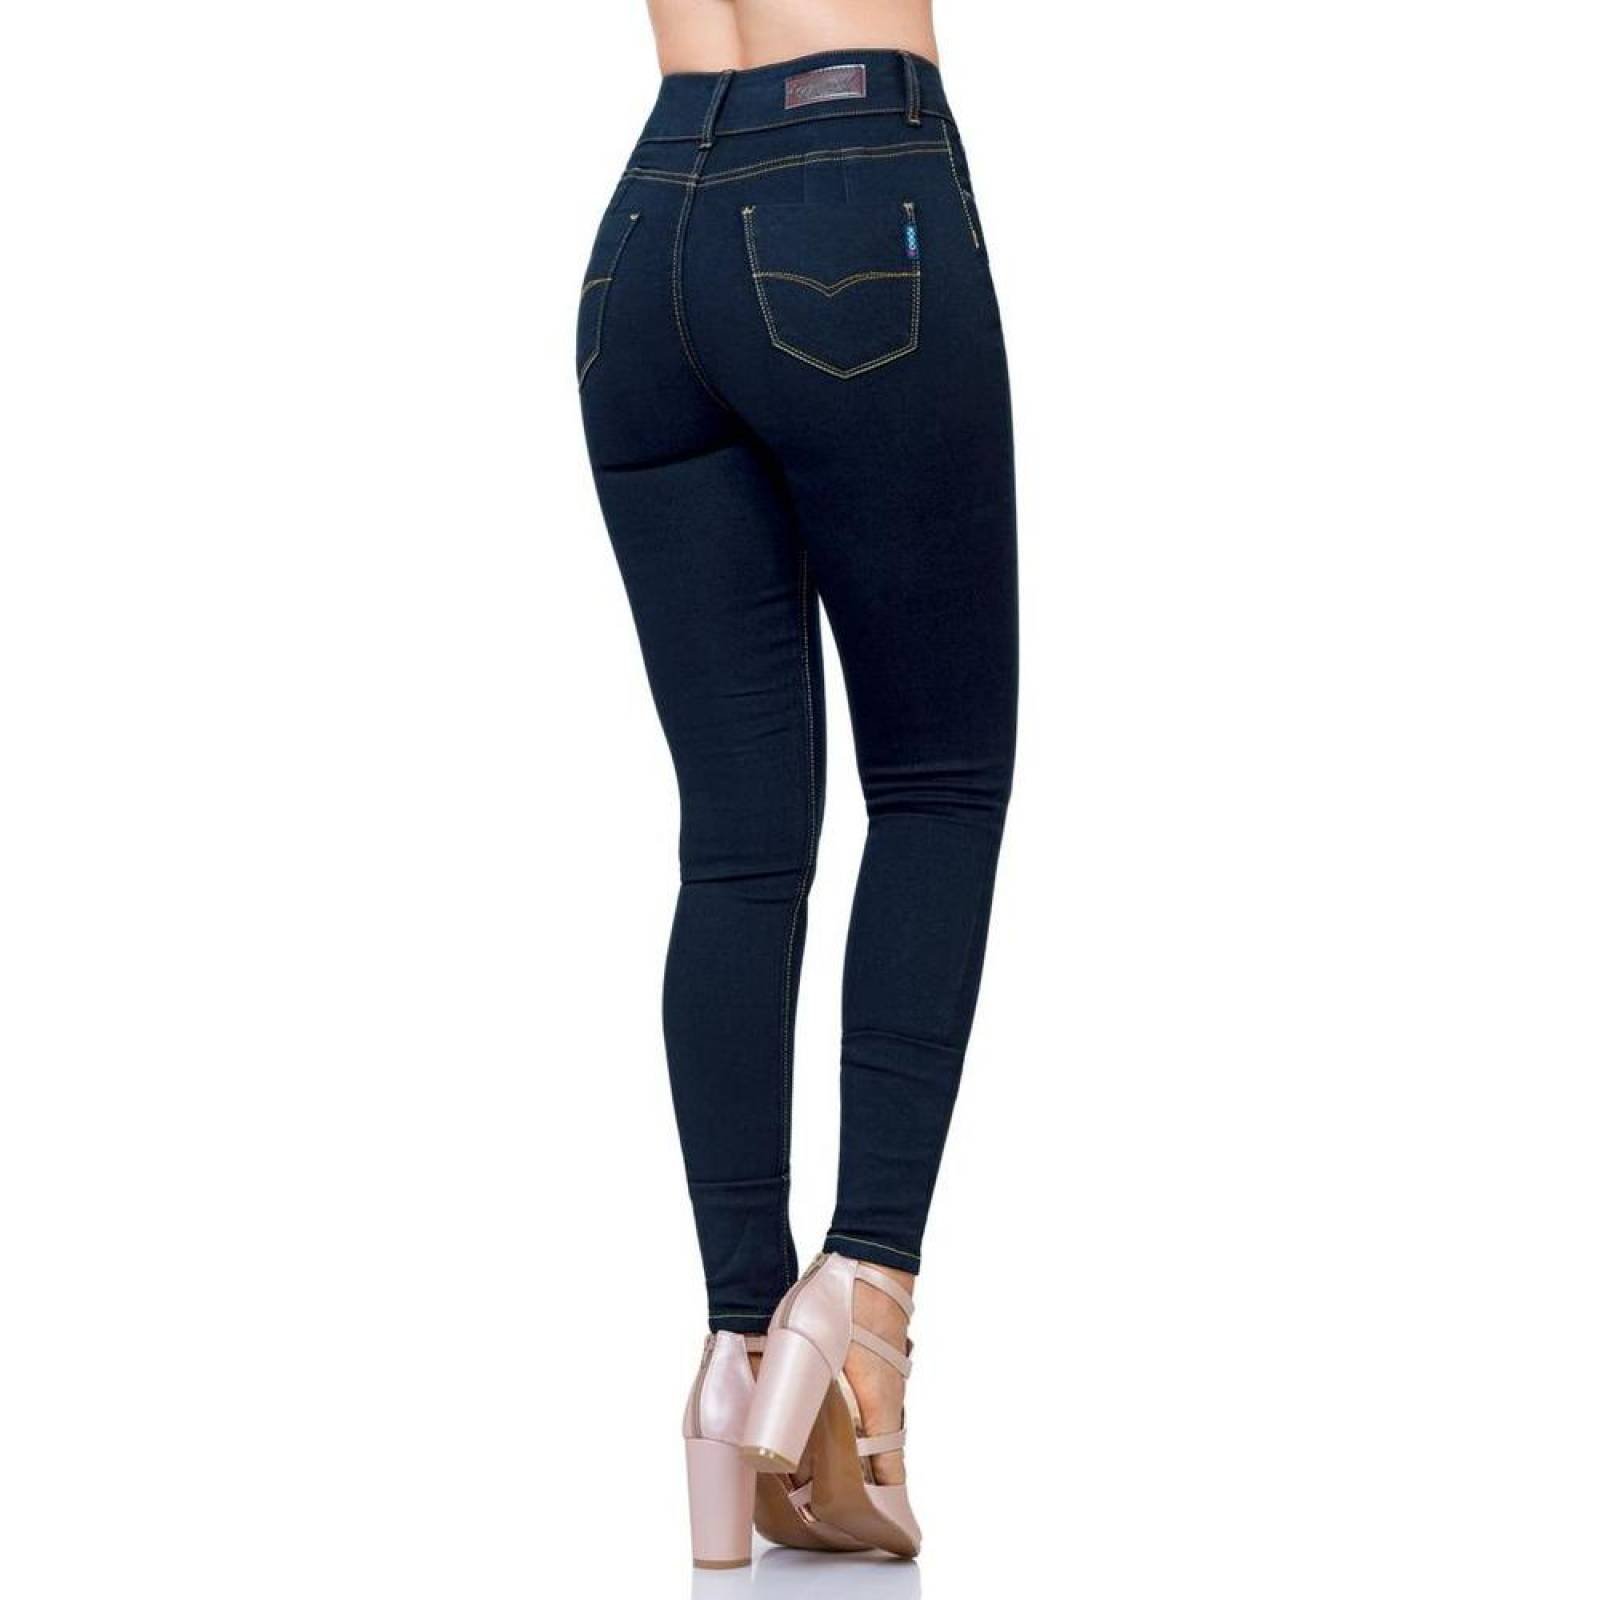 Jeans Básico Mujer Oggi Satin 59103105 Mezclilla Stretch 